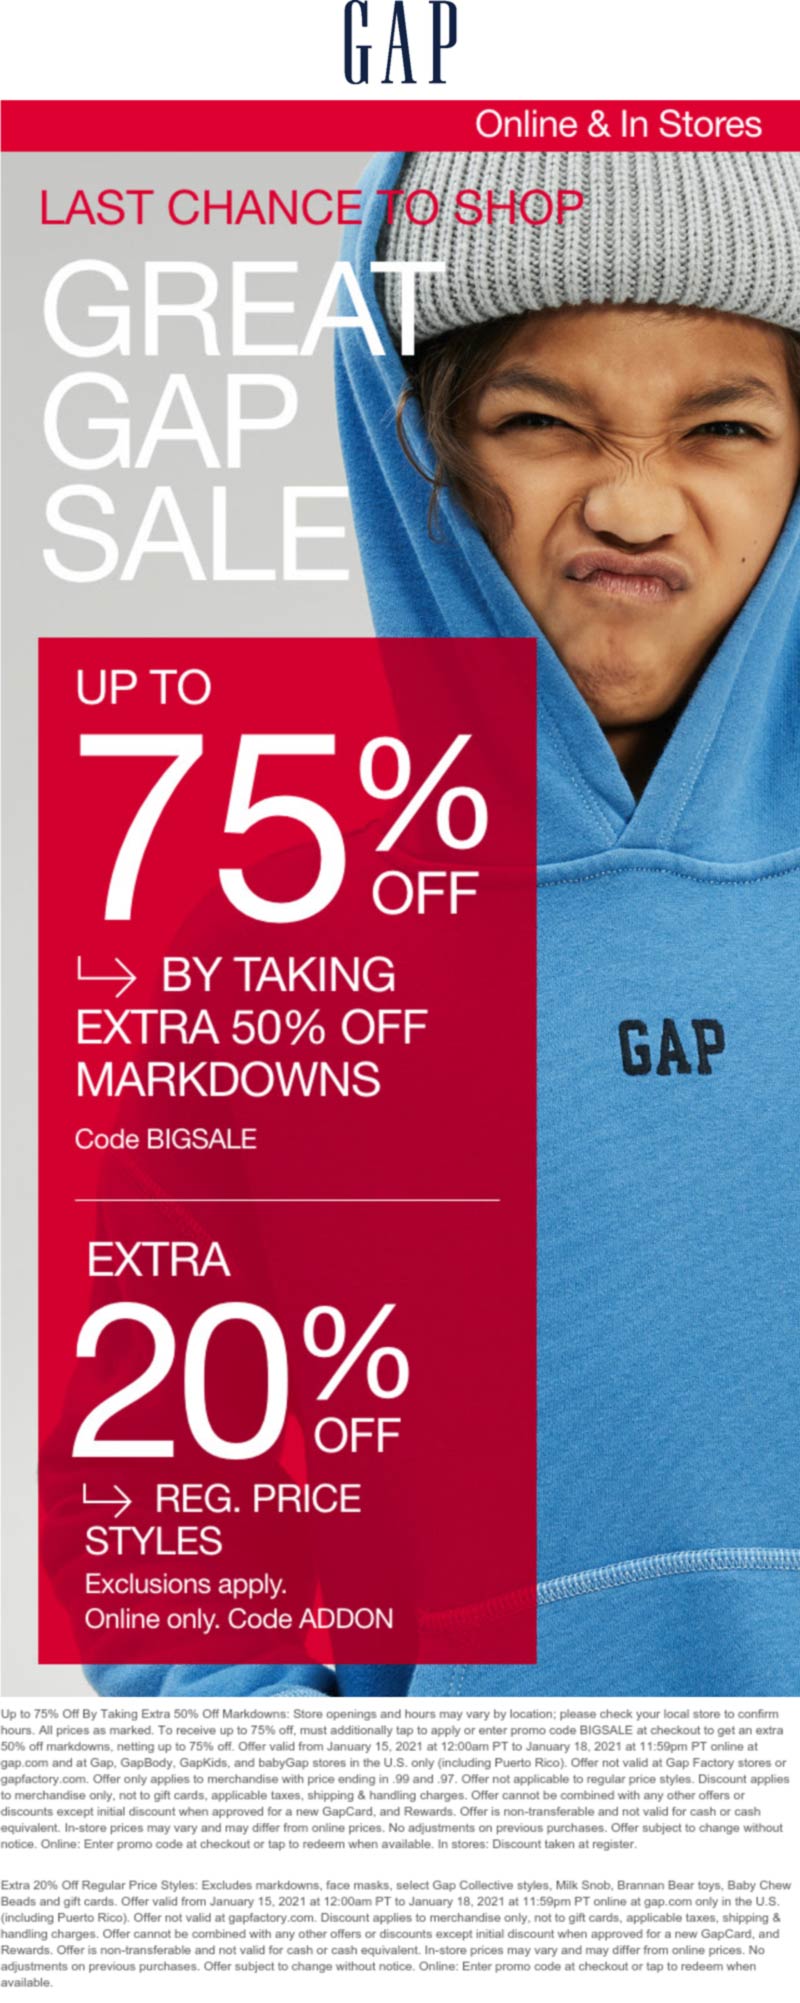 Gap stores Coupon  Extra 50% off sale items & more at Gap via promo codes BIGSALE and ADDON #gap 